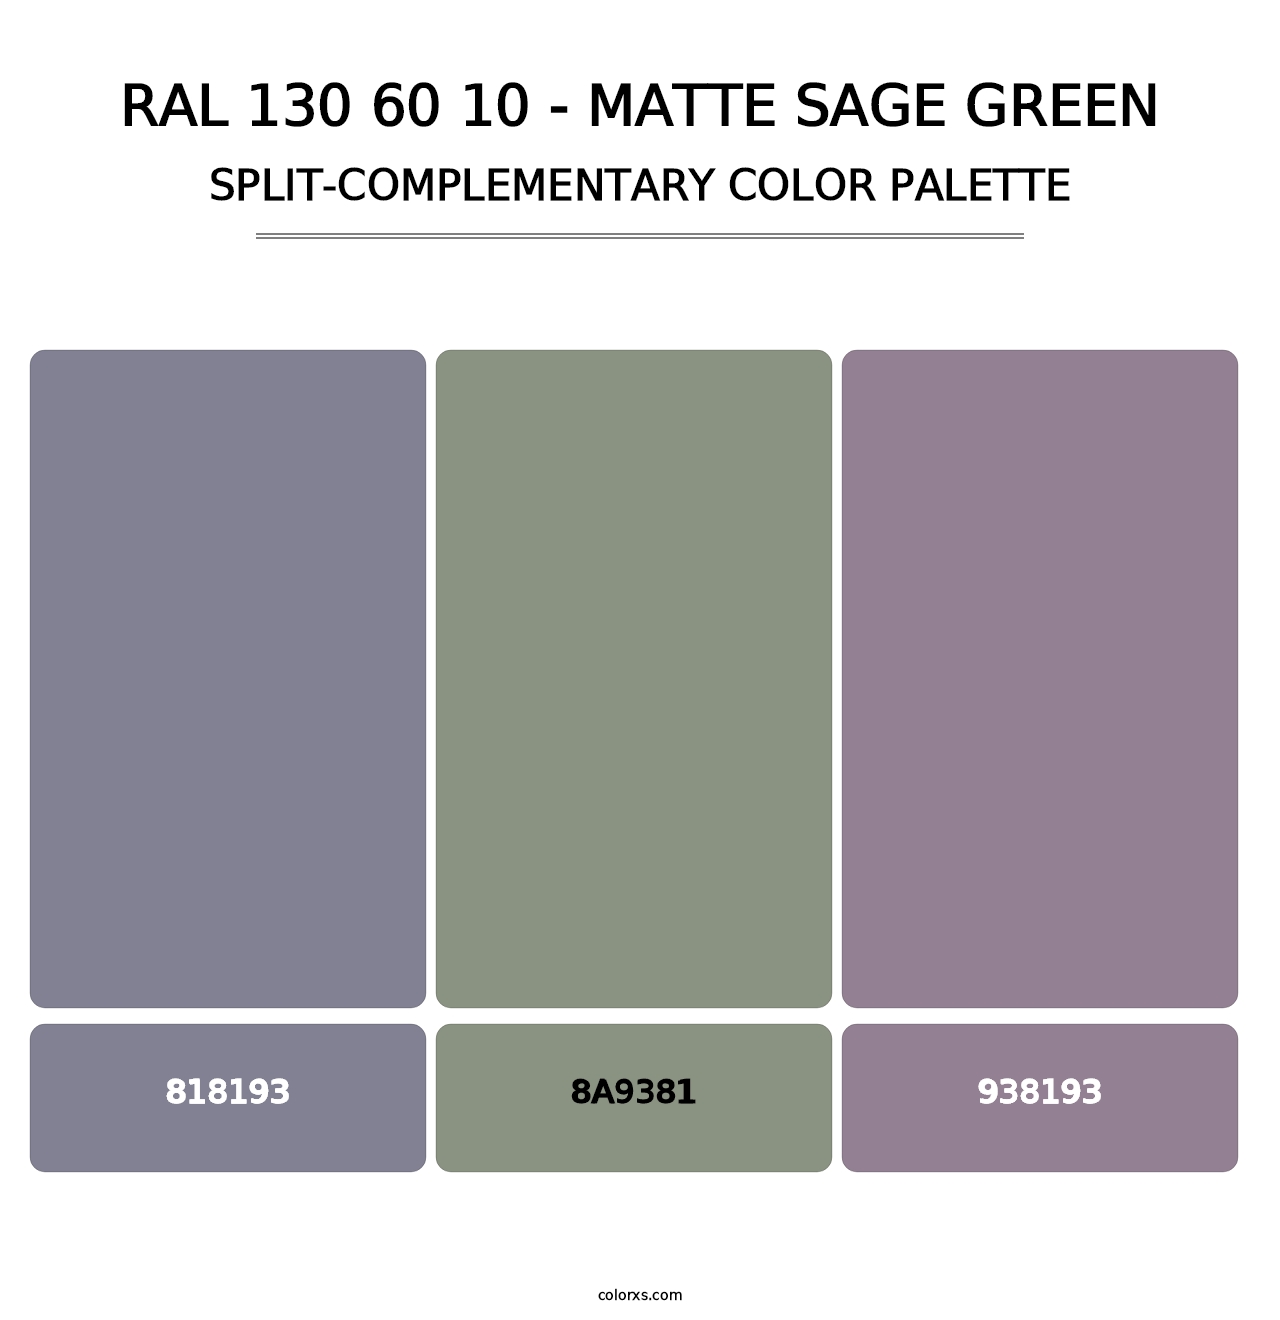 RAL 130 60 10 - Matte Sage Green - Split-Complementary Color Palette